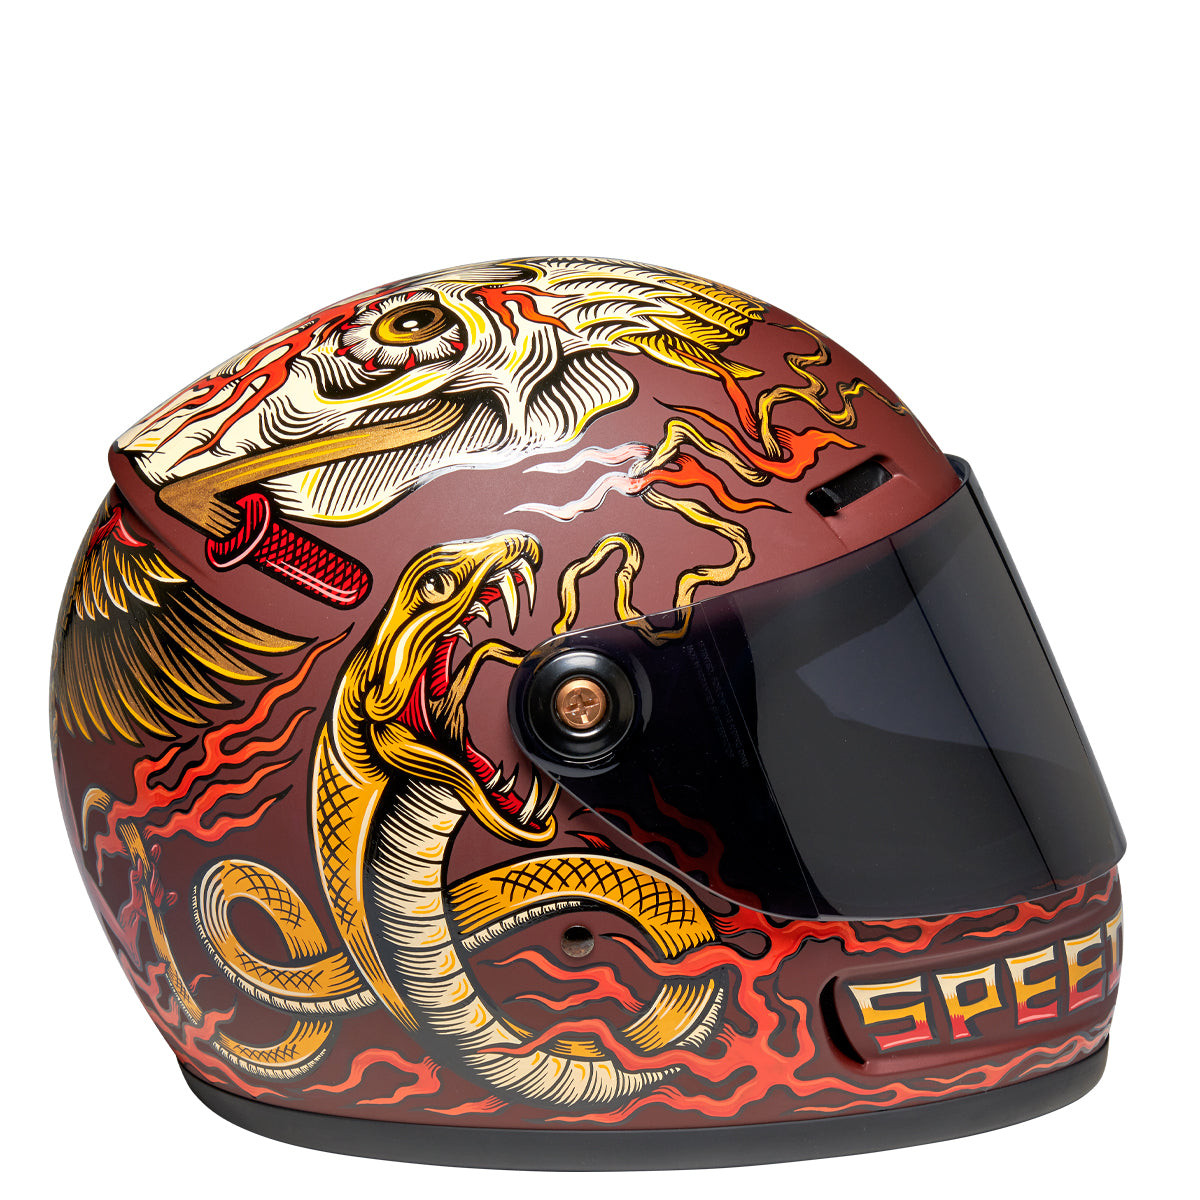 Custom Painted Gringo SV Helmet by Jake "Creep" Crawley